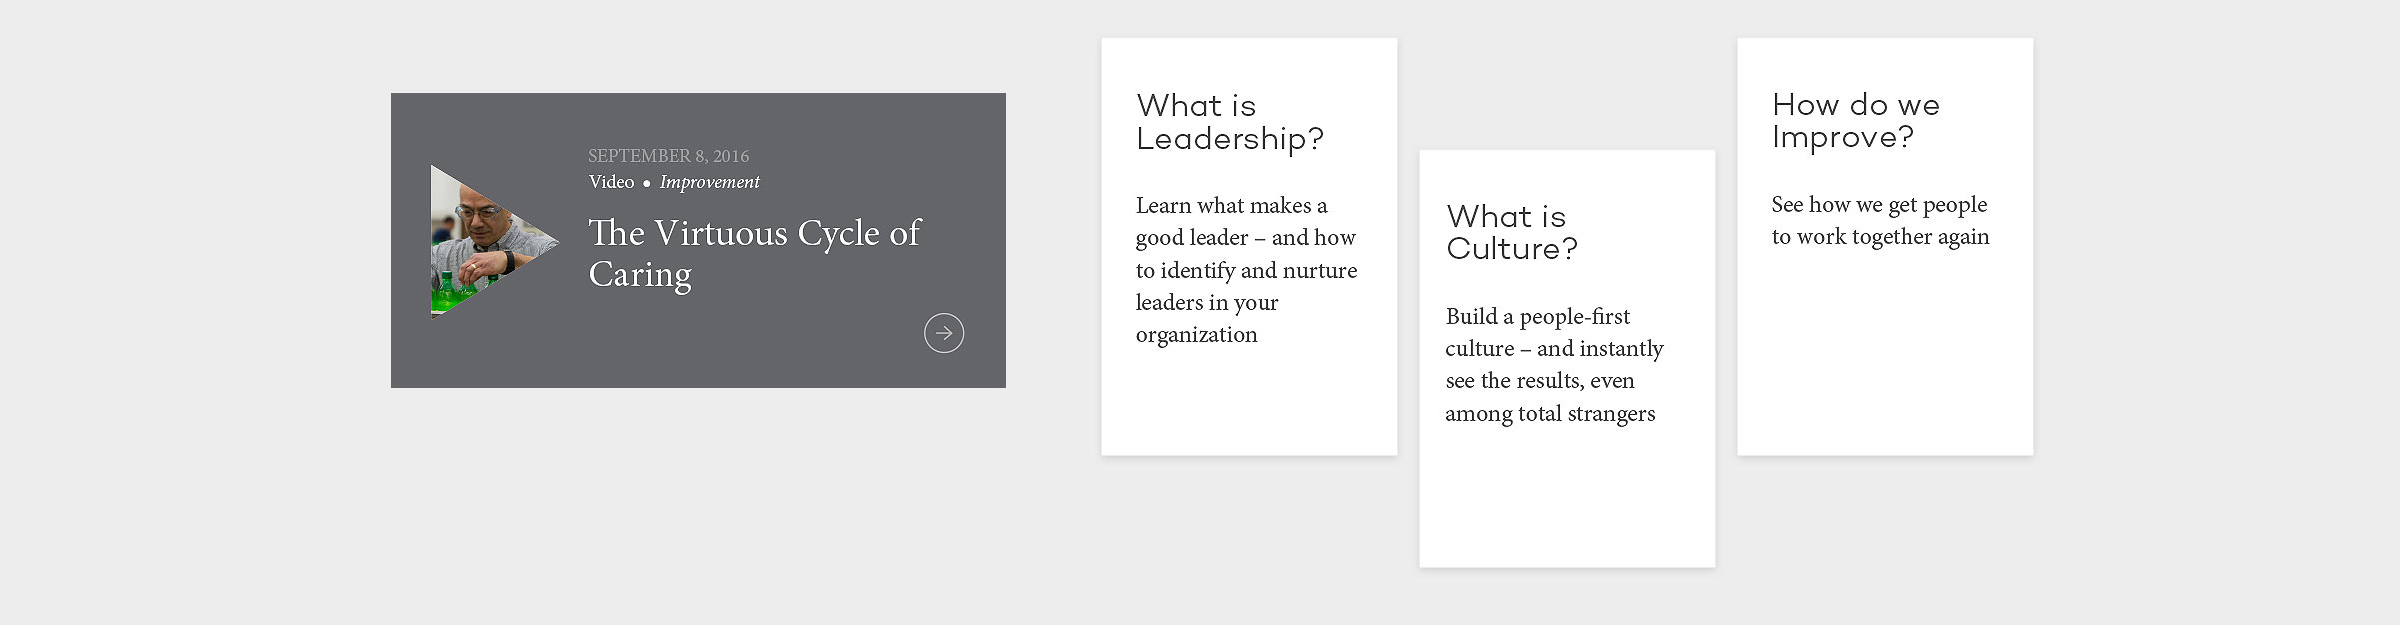 Elements of the Barry Wehmiller Leadership Institute Branding Program